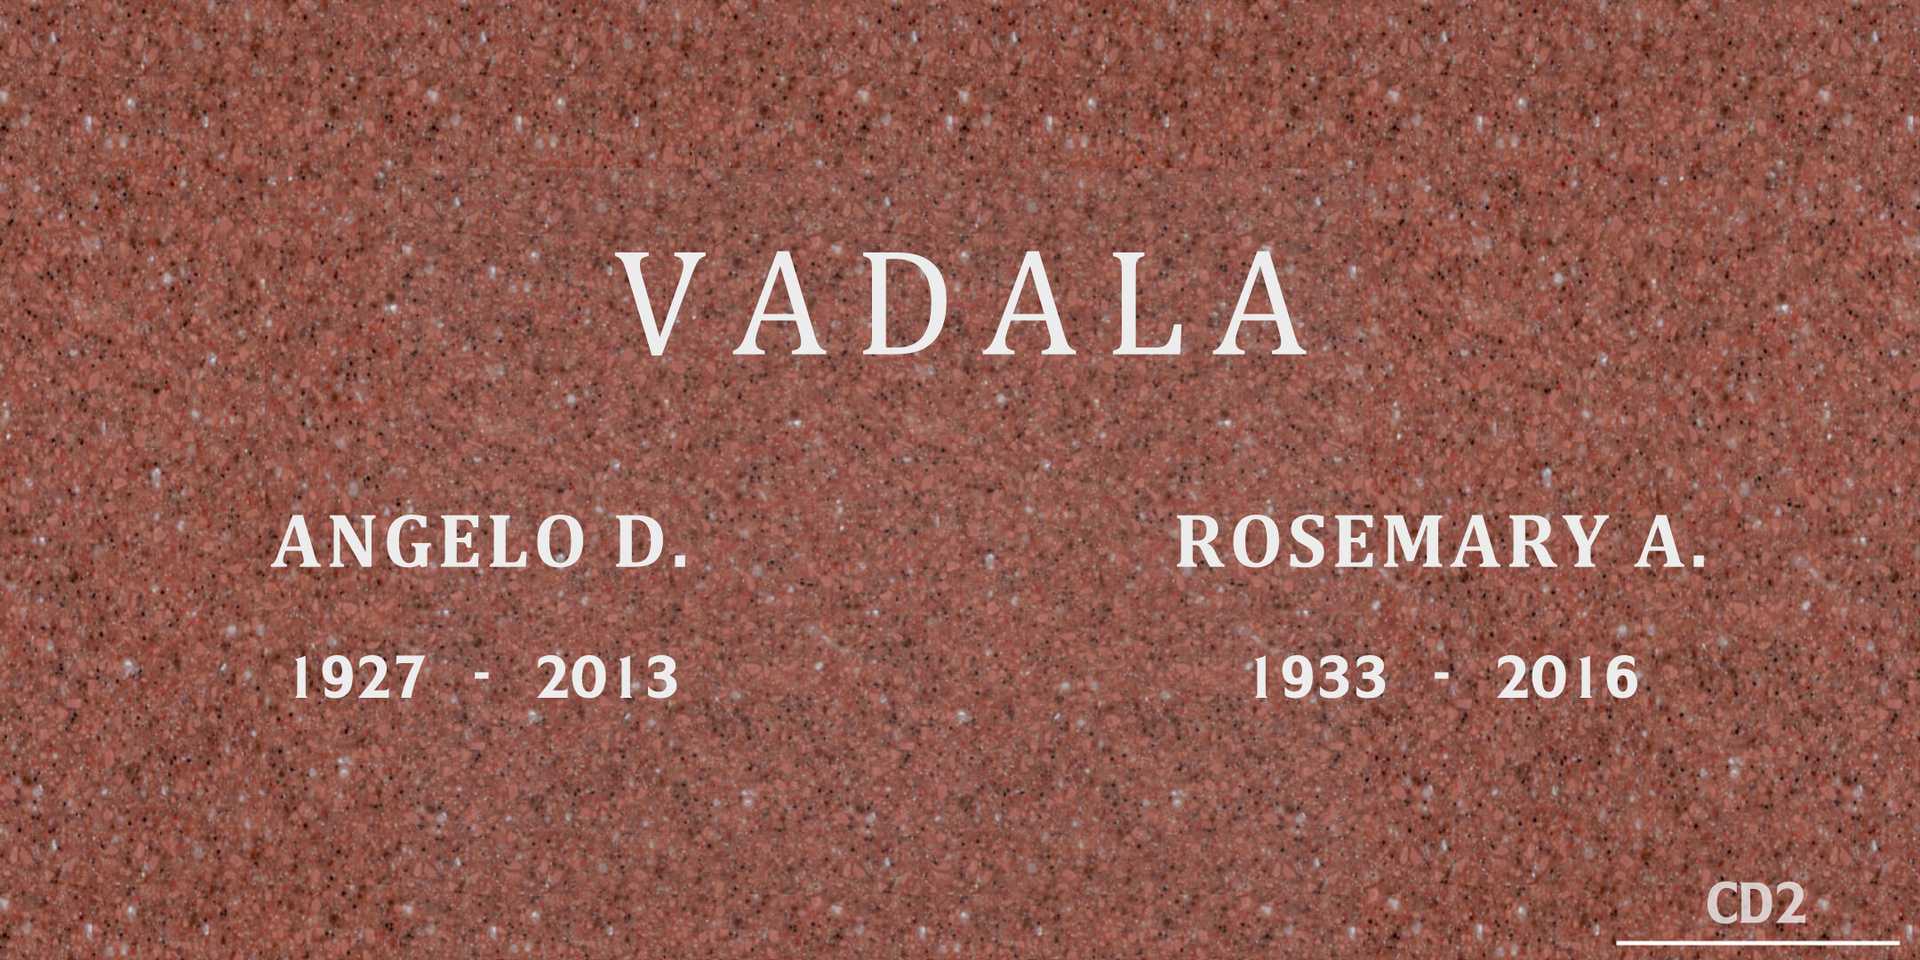 Rosemary A. Vadala's grave